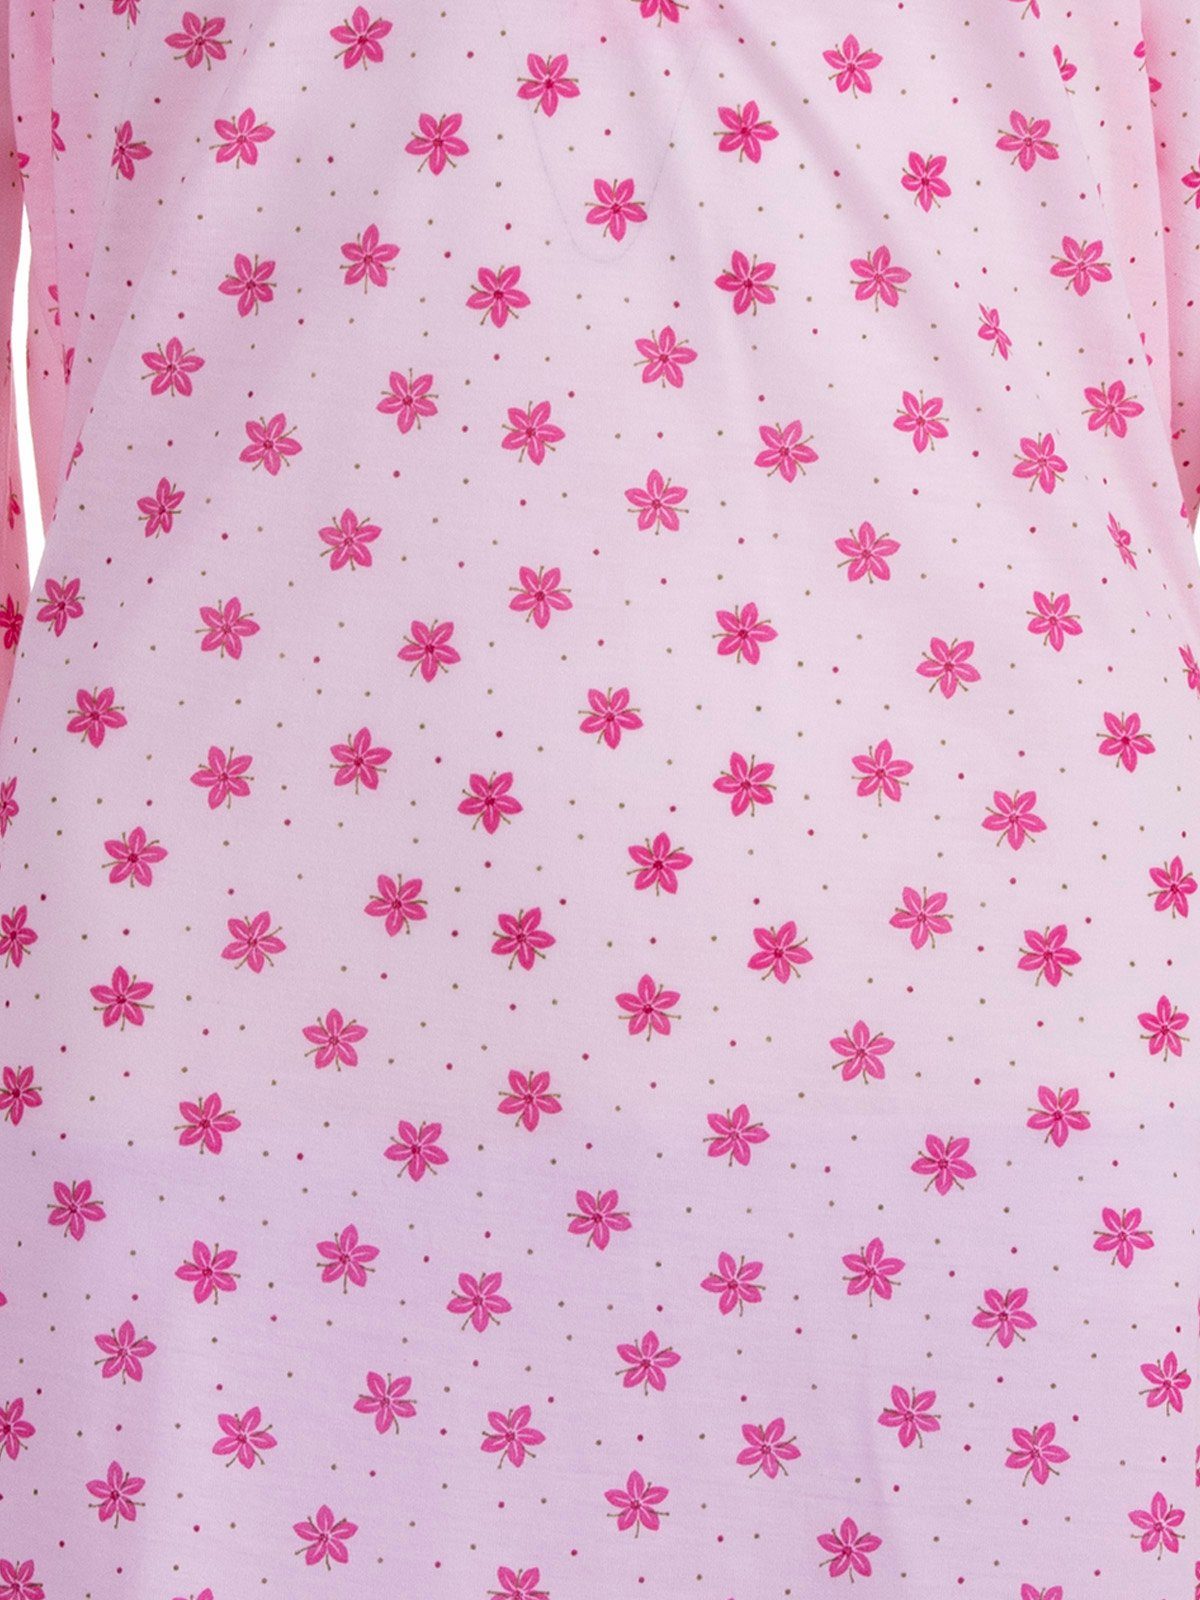 Lucky Nachthemd Nachthemd Langarm - rosa Blüten Pünktchen